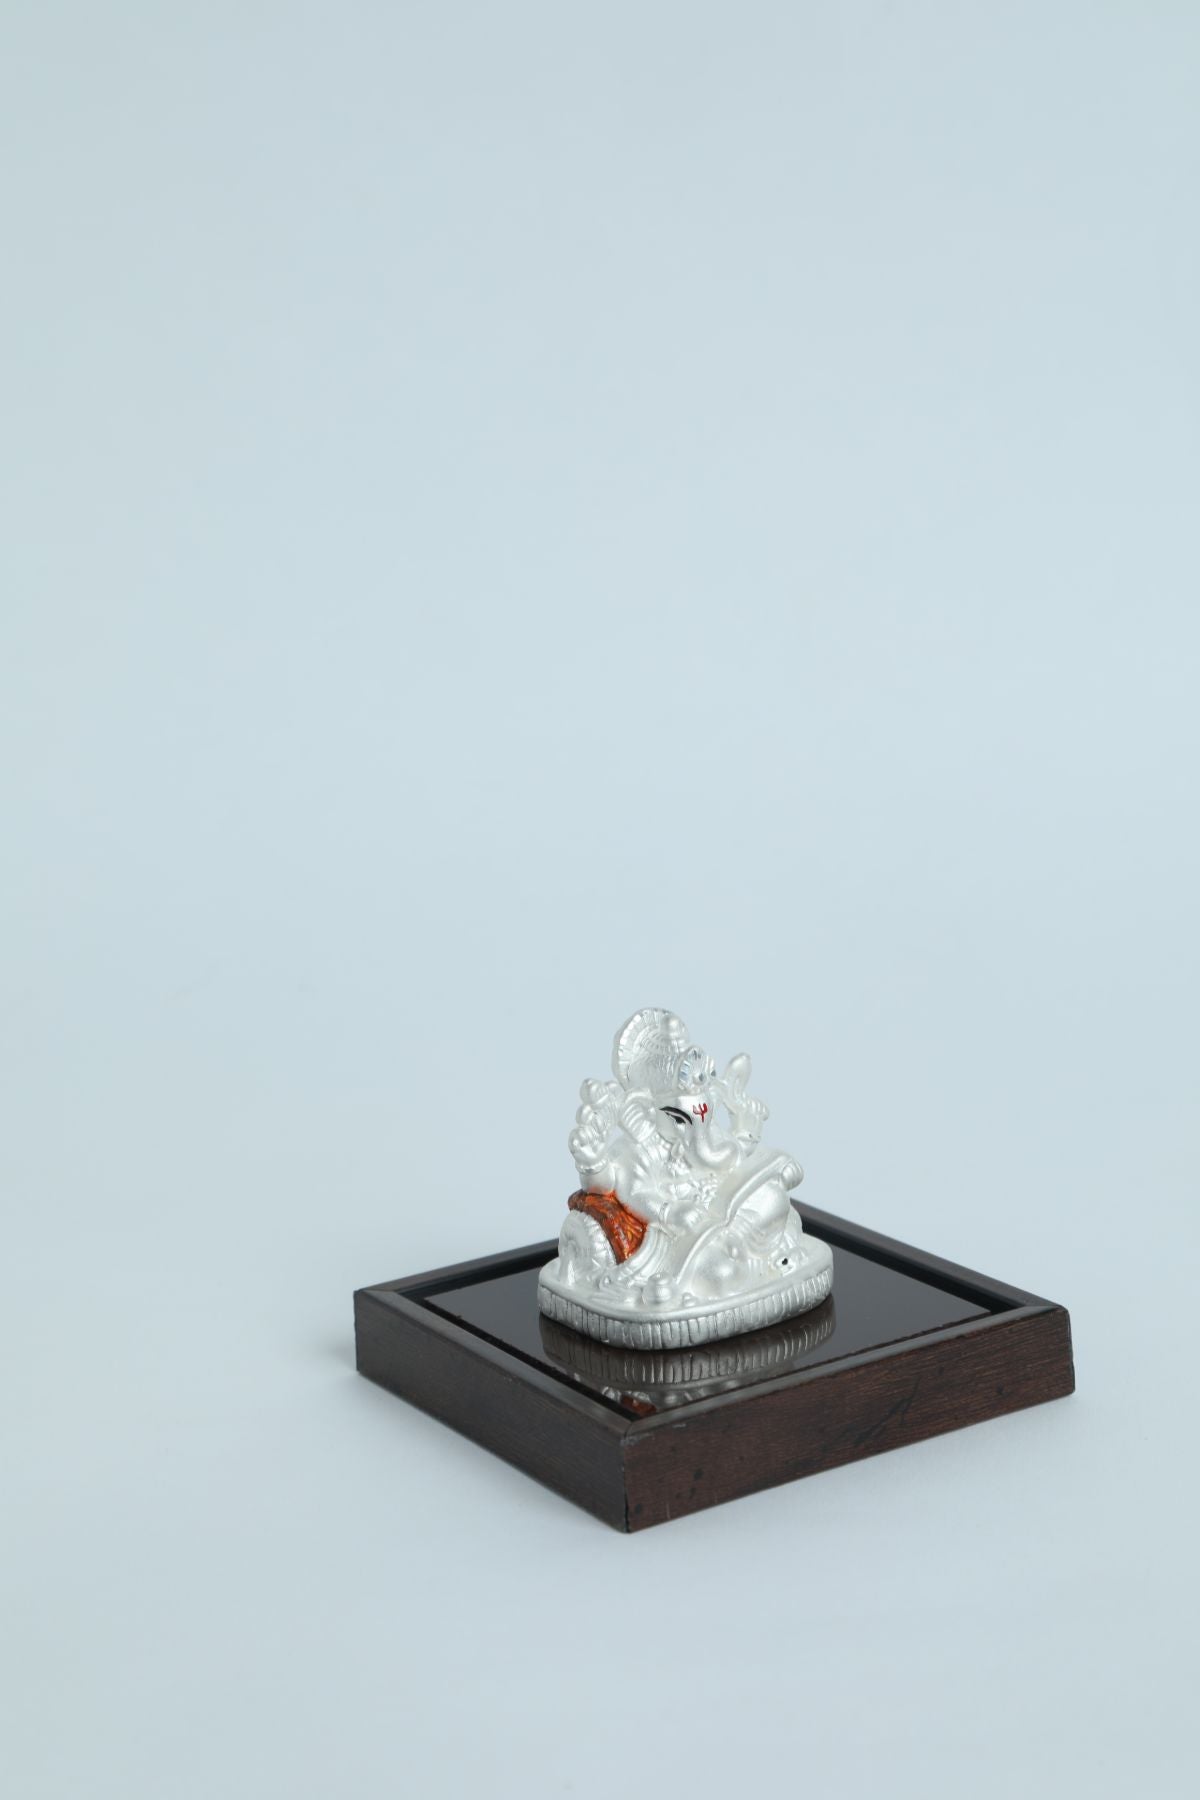 999 Pure Silver Ganesha Idol By Krysaliis Isvara - Krign_Ms23 Idols